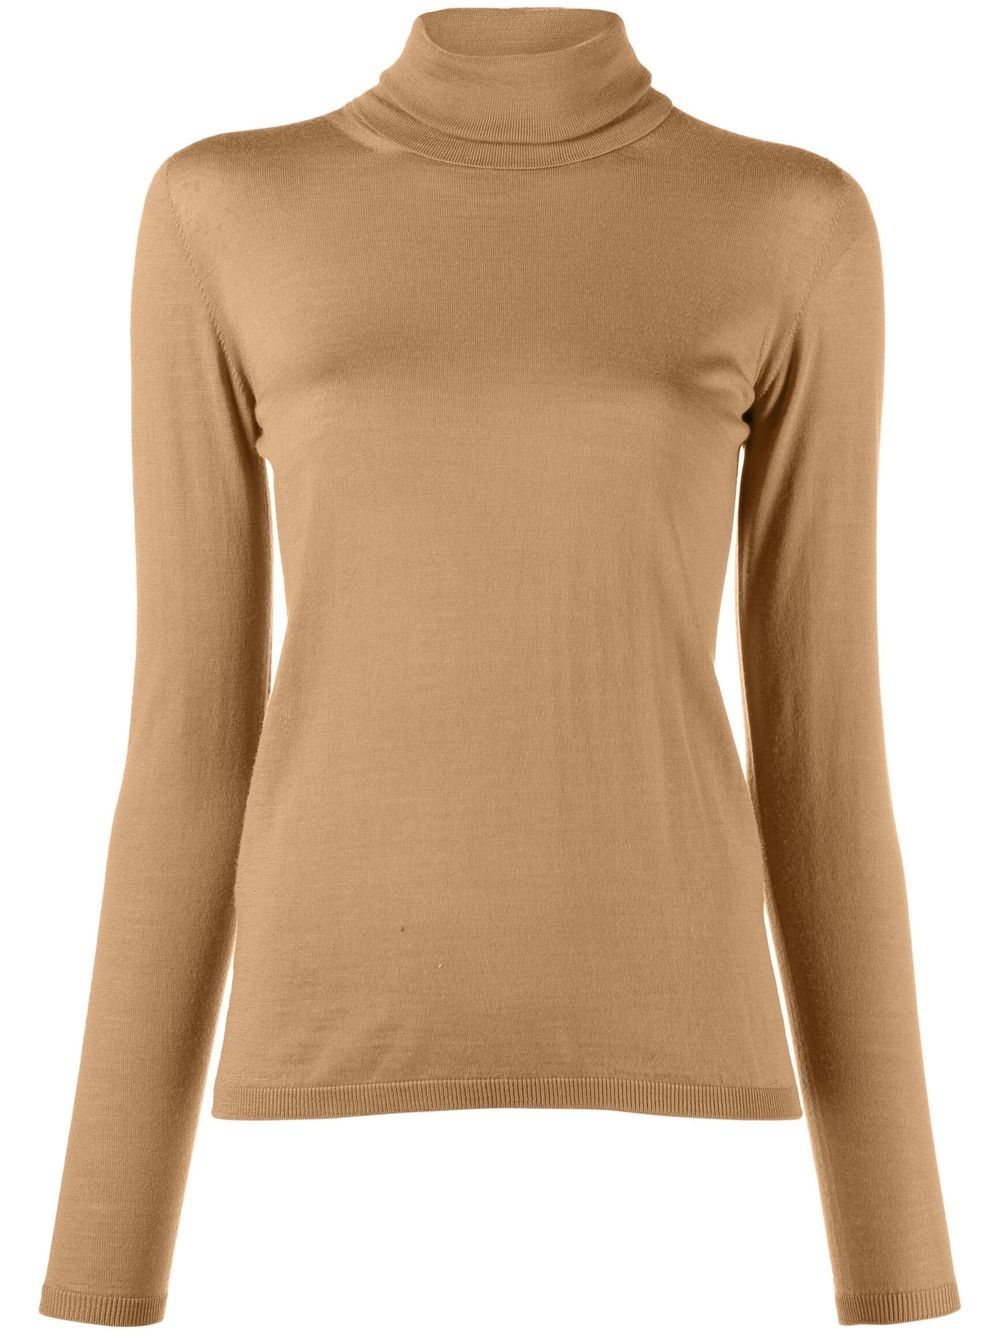 Image 1 of Max Mara long-sleeve knitted top